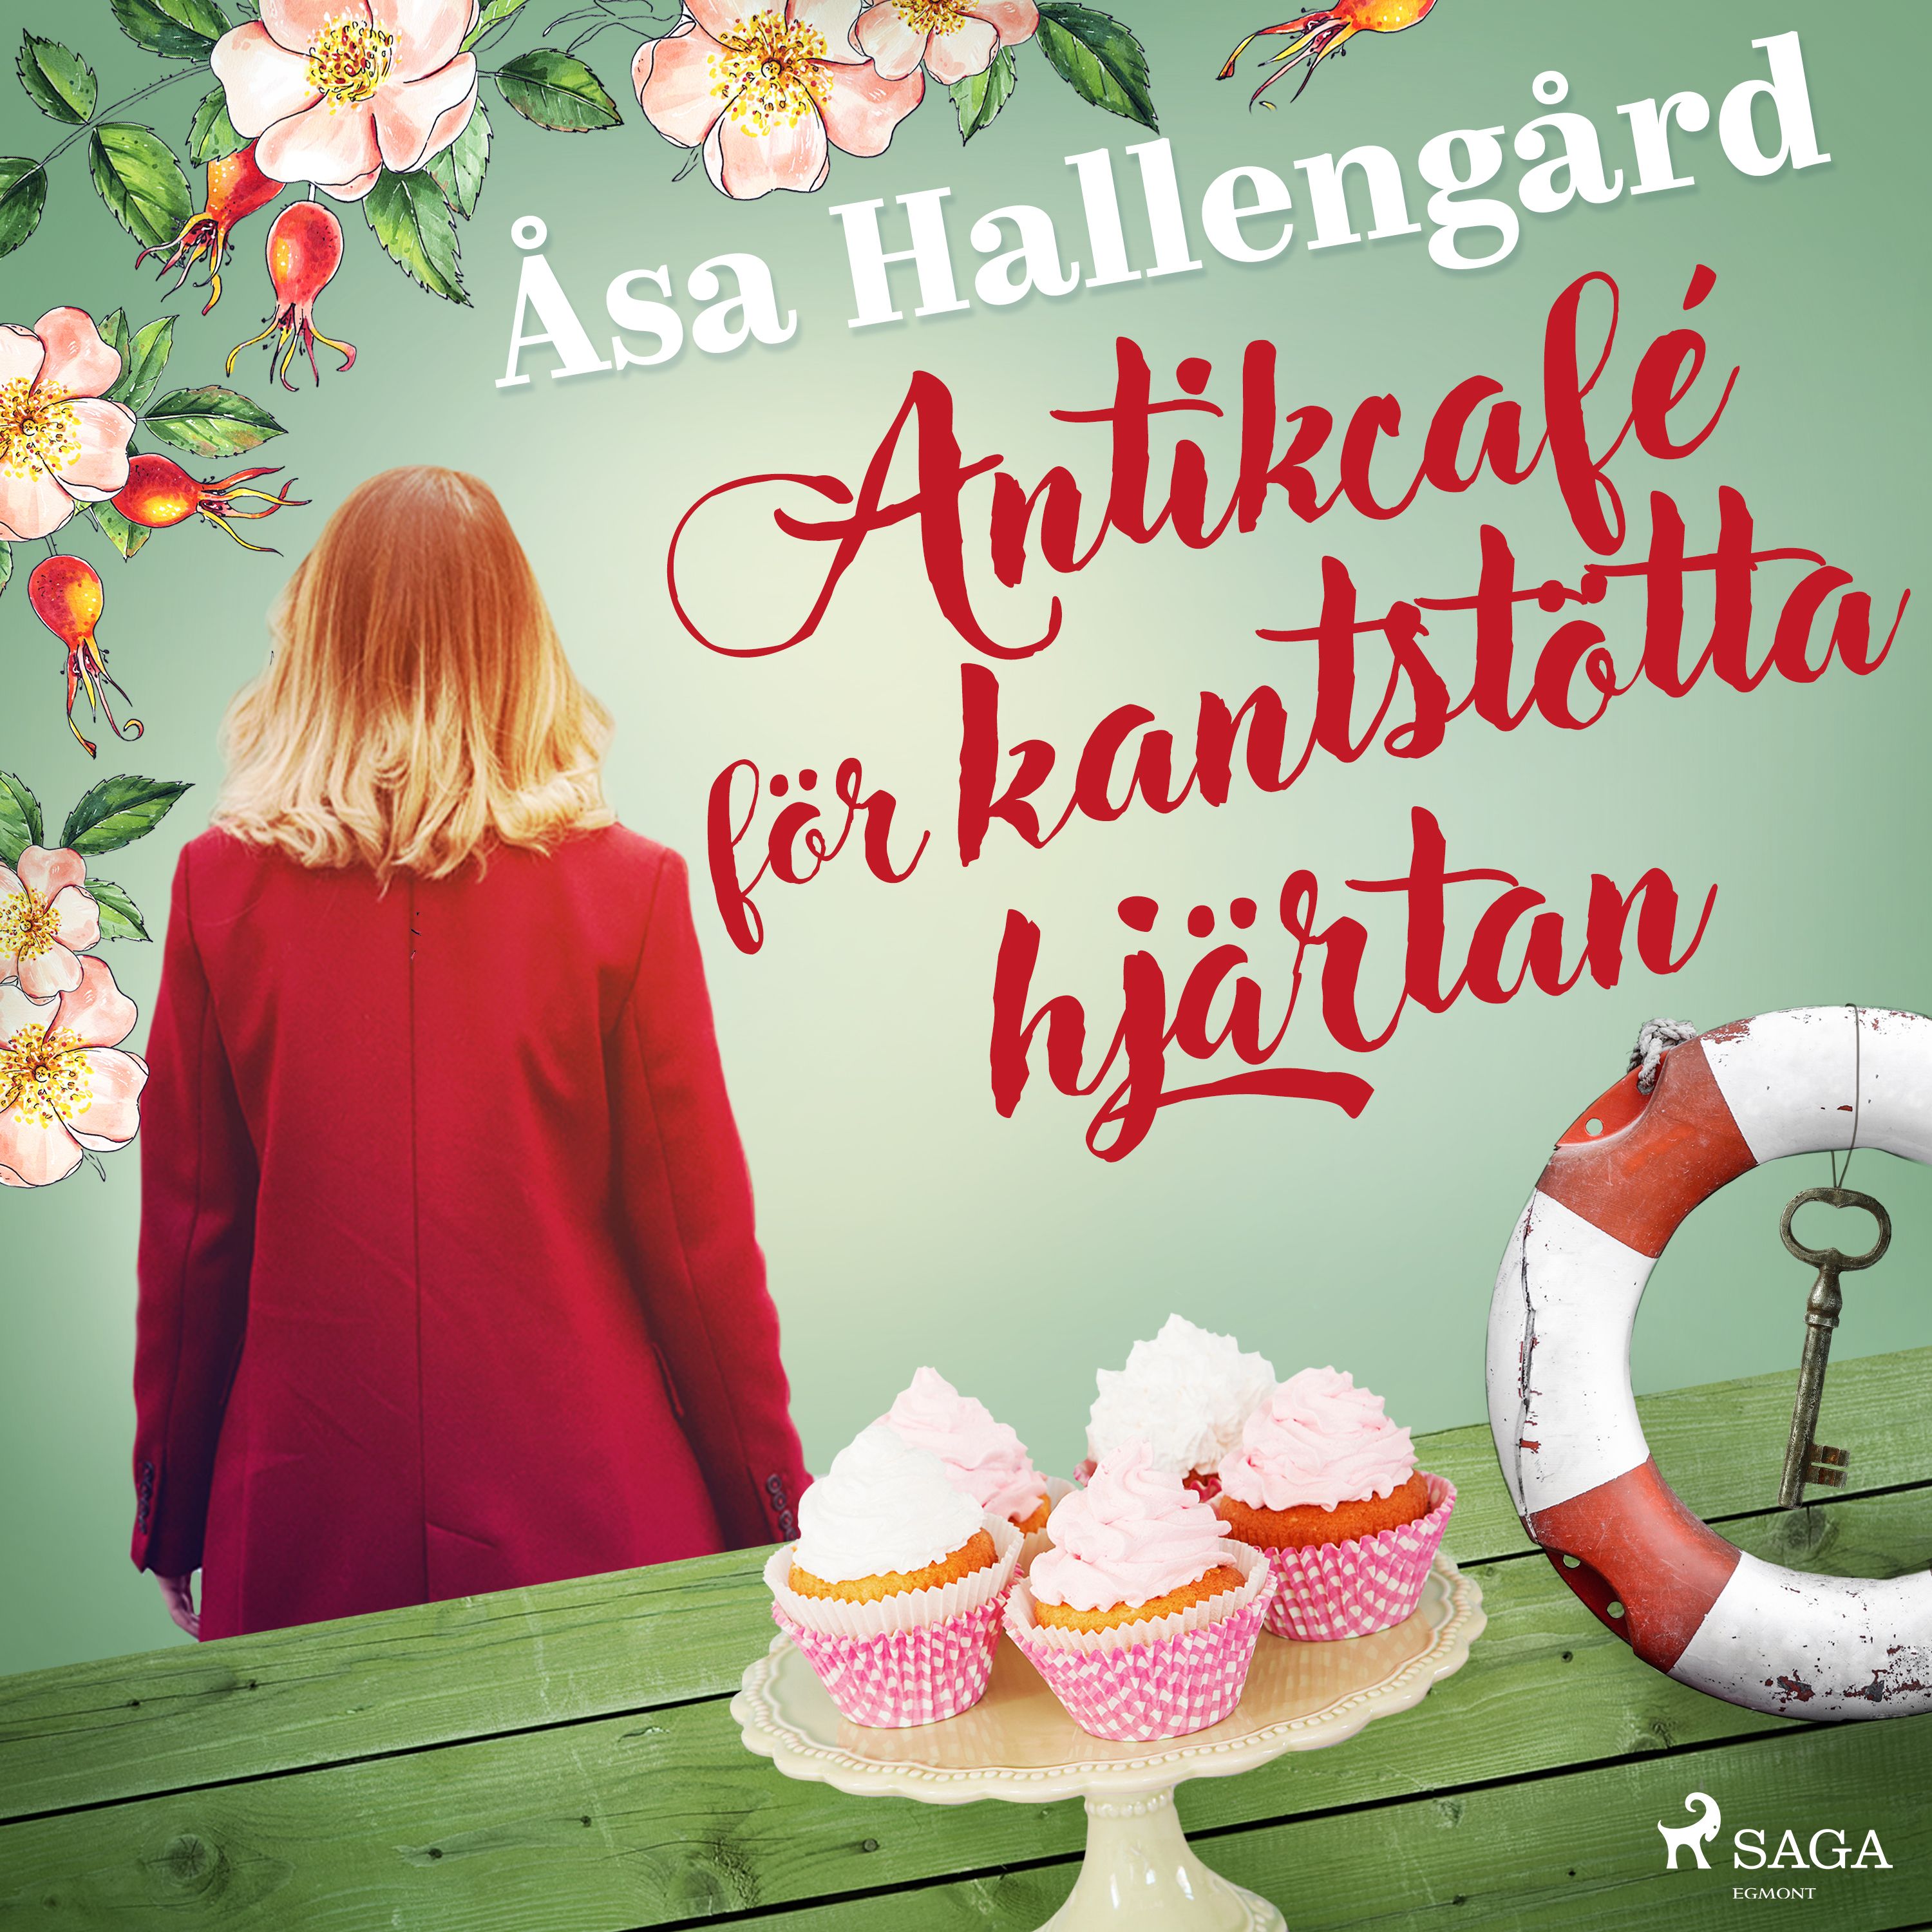 Antikcafé för kantstötta hjärtan, lydbog af Åsa Hallengård